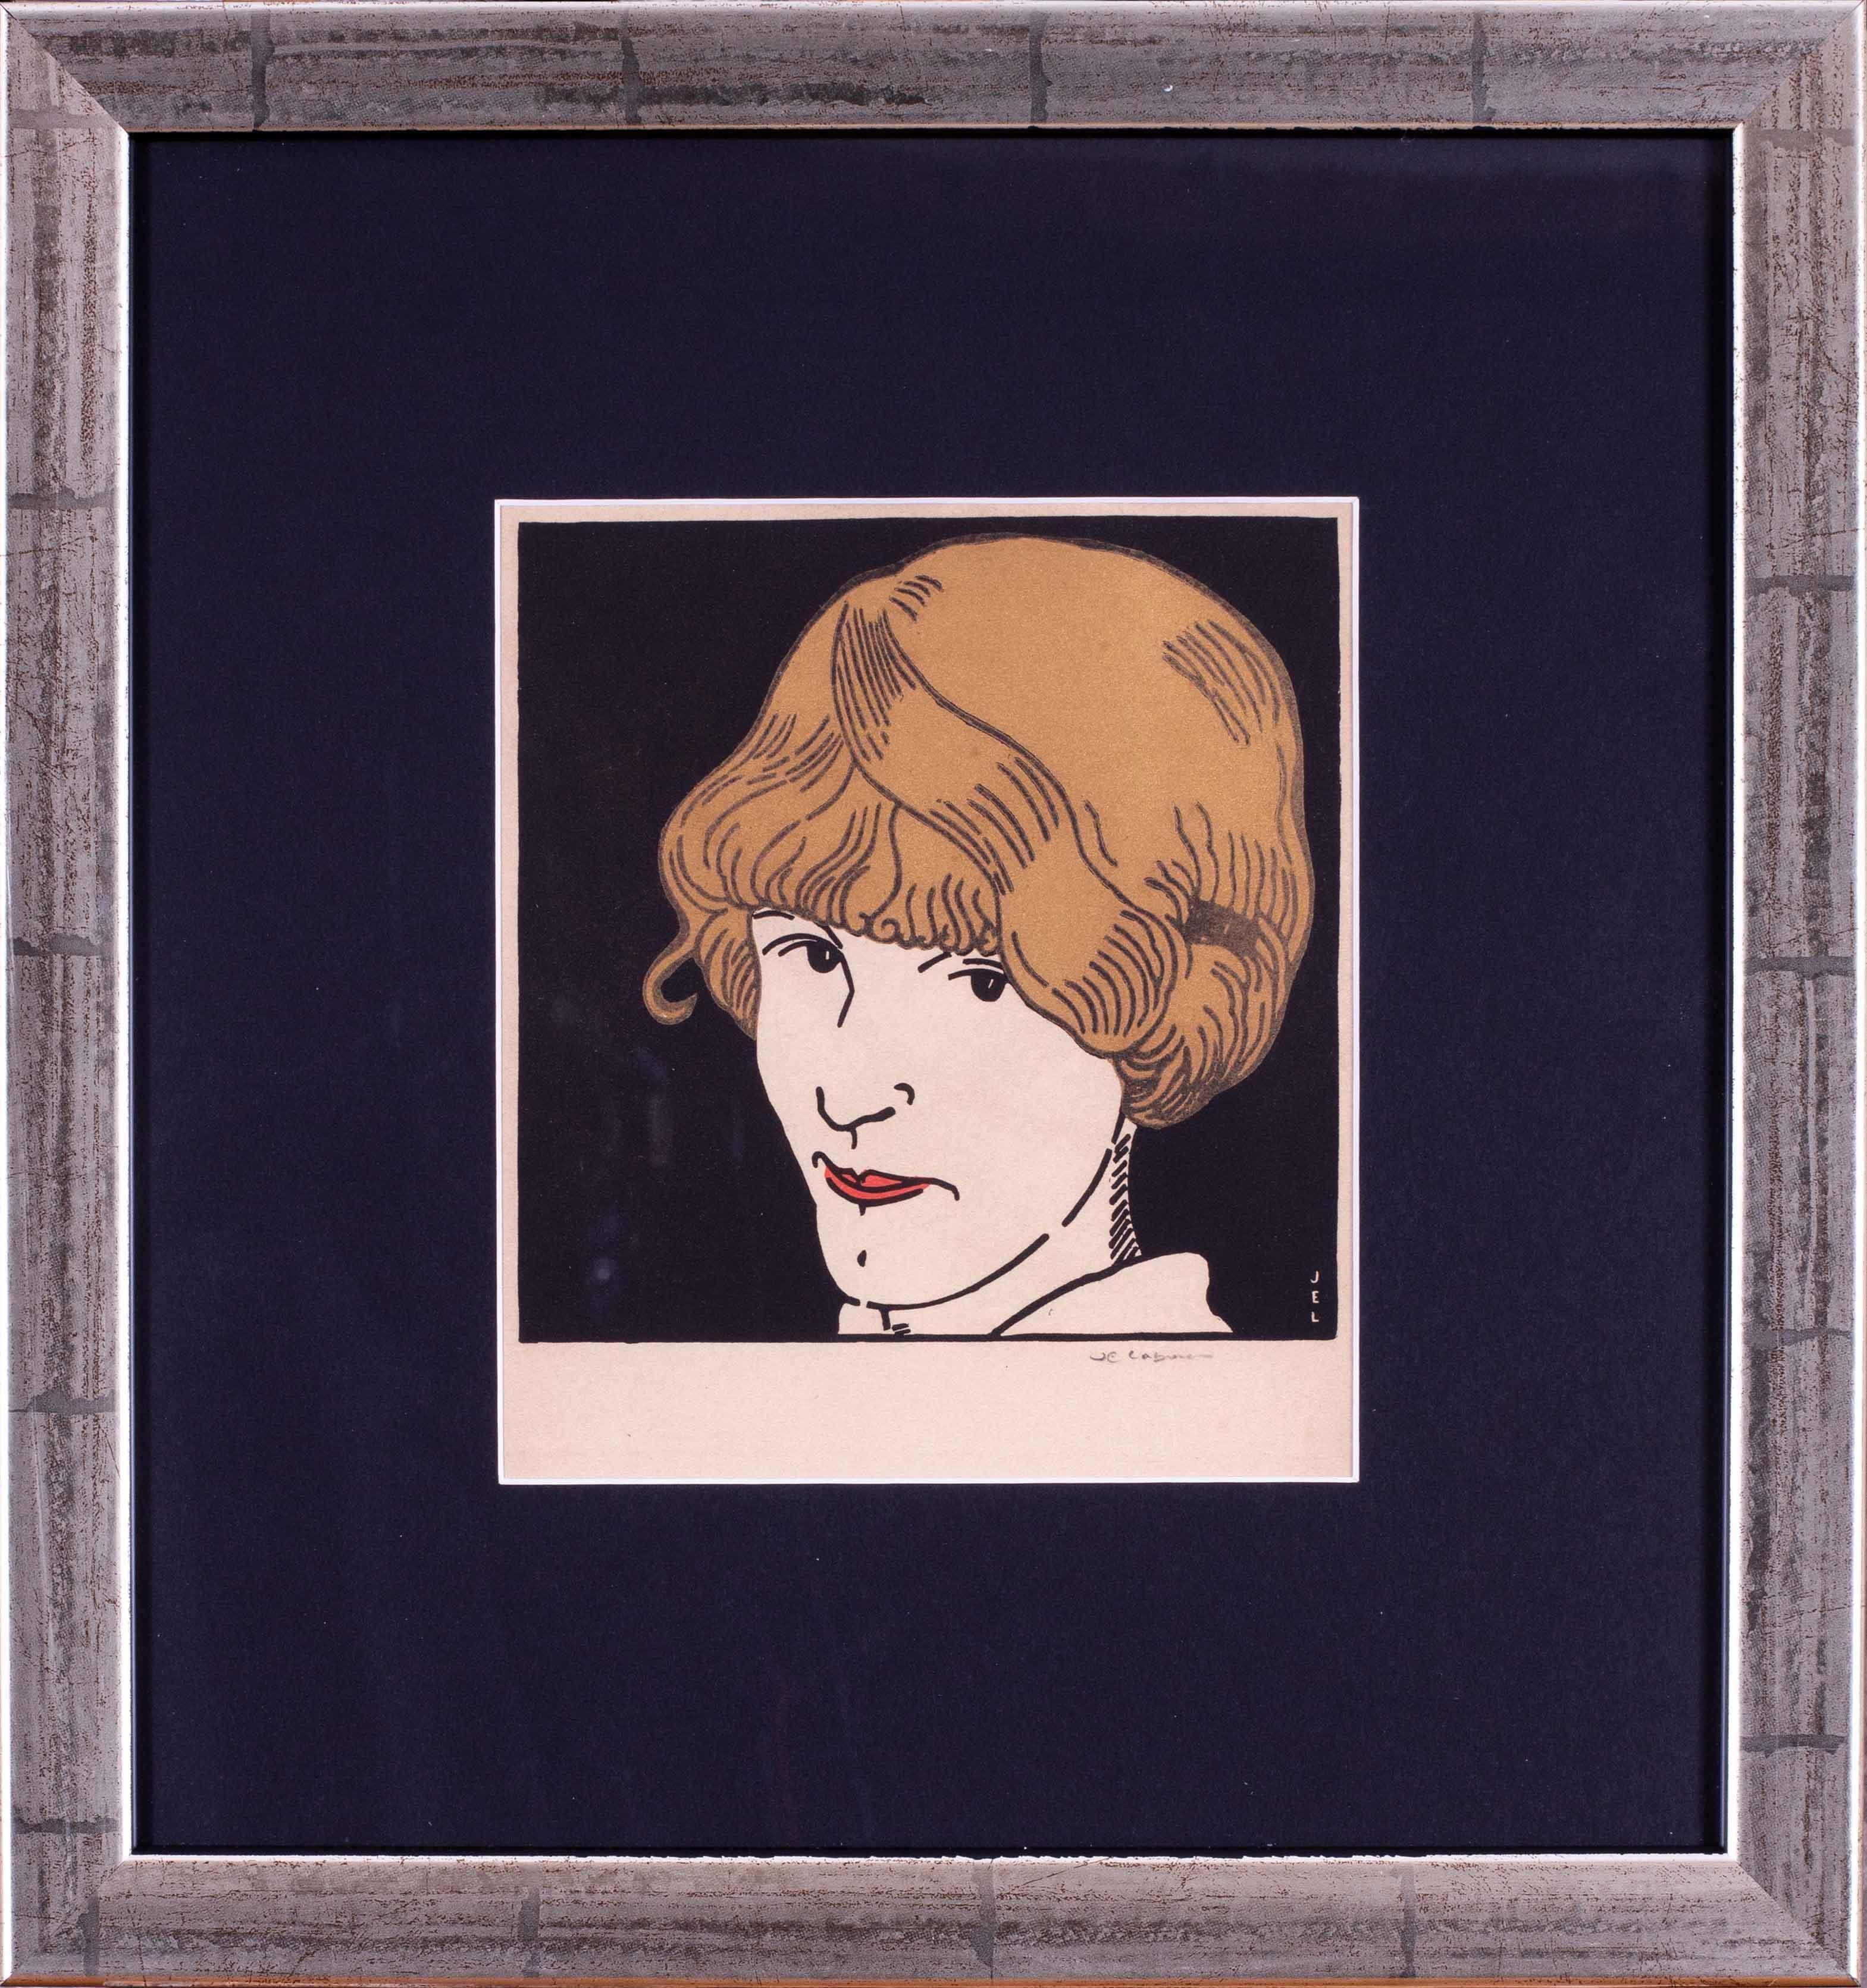 Jean Emile Laboureur (französisch, 1877-1943)
Masque aux cheveux d'or (1912)
Holzschnitt
Signiert "J. E. Laboureur" (unten rechts) und gestempelt "The London Studio" (unten rechts)
6,7/8 x 6 Zoll (17,5 x 15,3 cm) für Passepartout 

Jean Emile